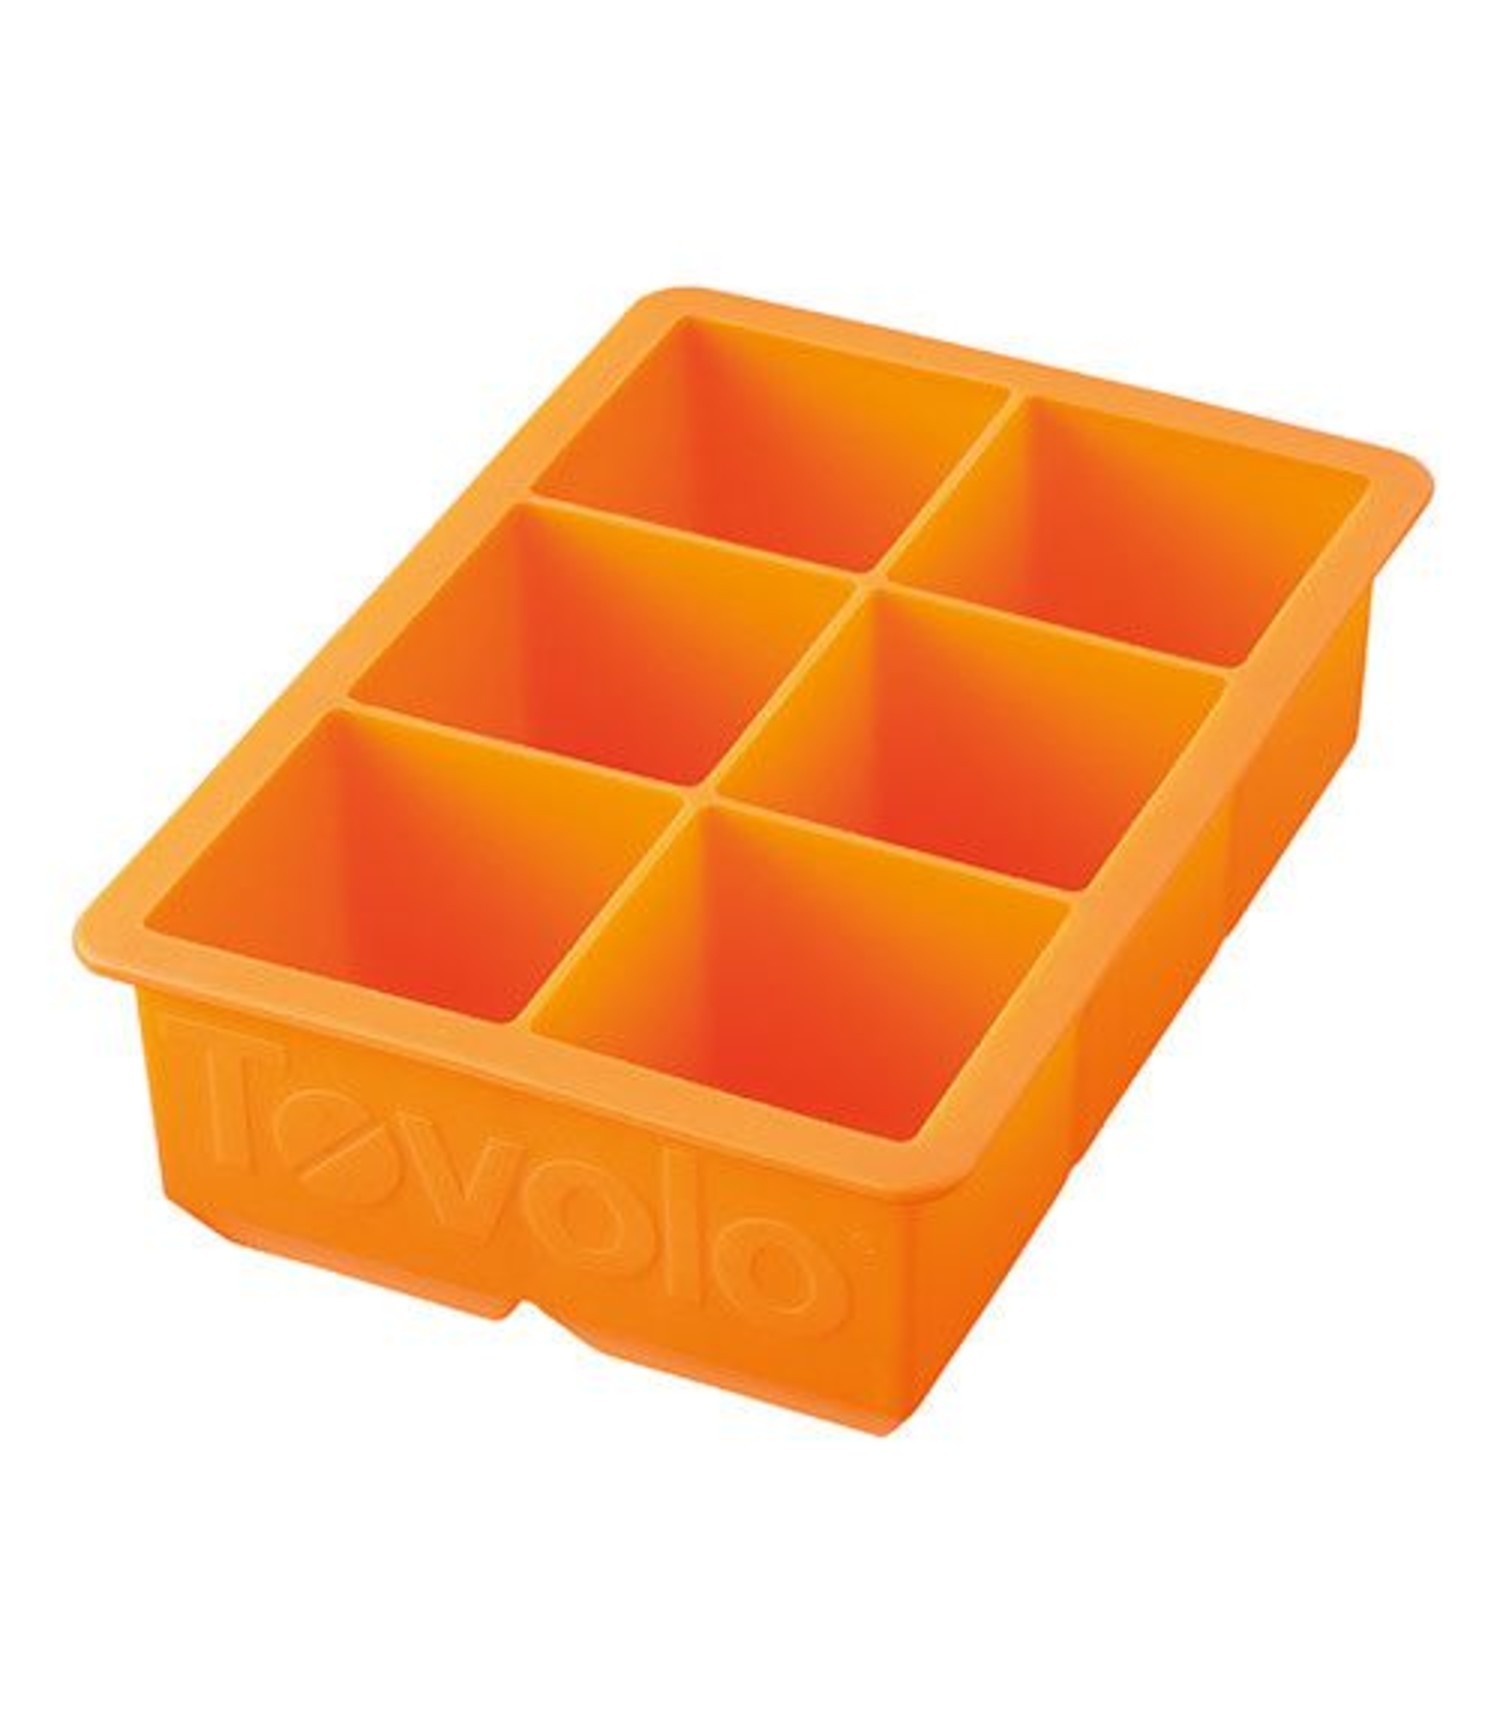 https://cdn.shoplightspeed.com/shops/606142/files/9331218/1500x4000x3/tovolo-king-cube-2x2-ice-cube-tray.jpg